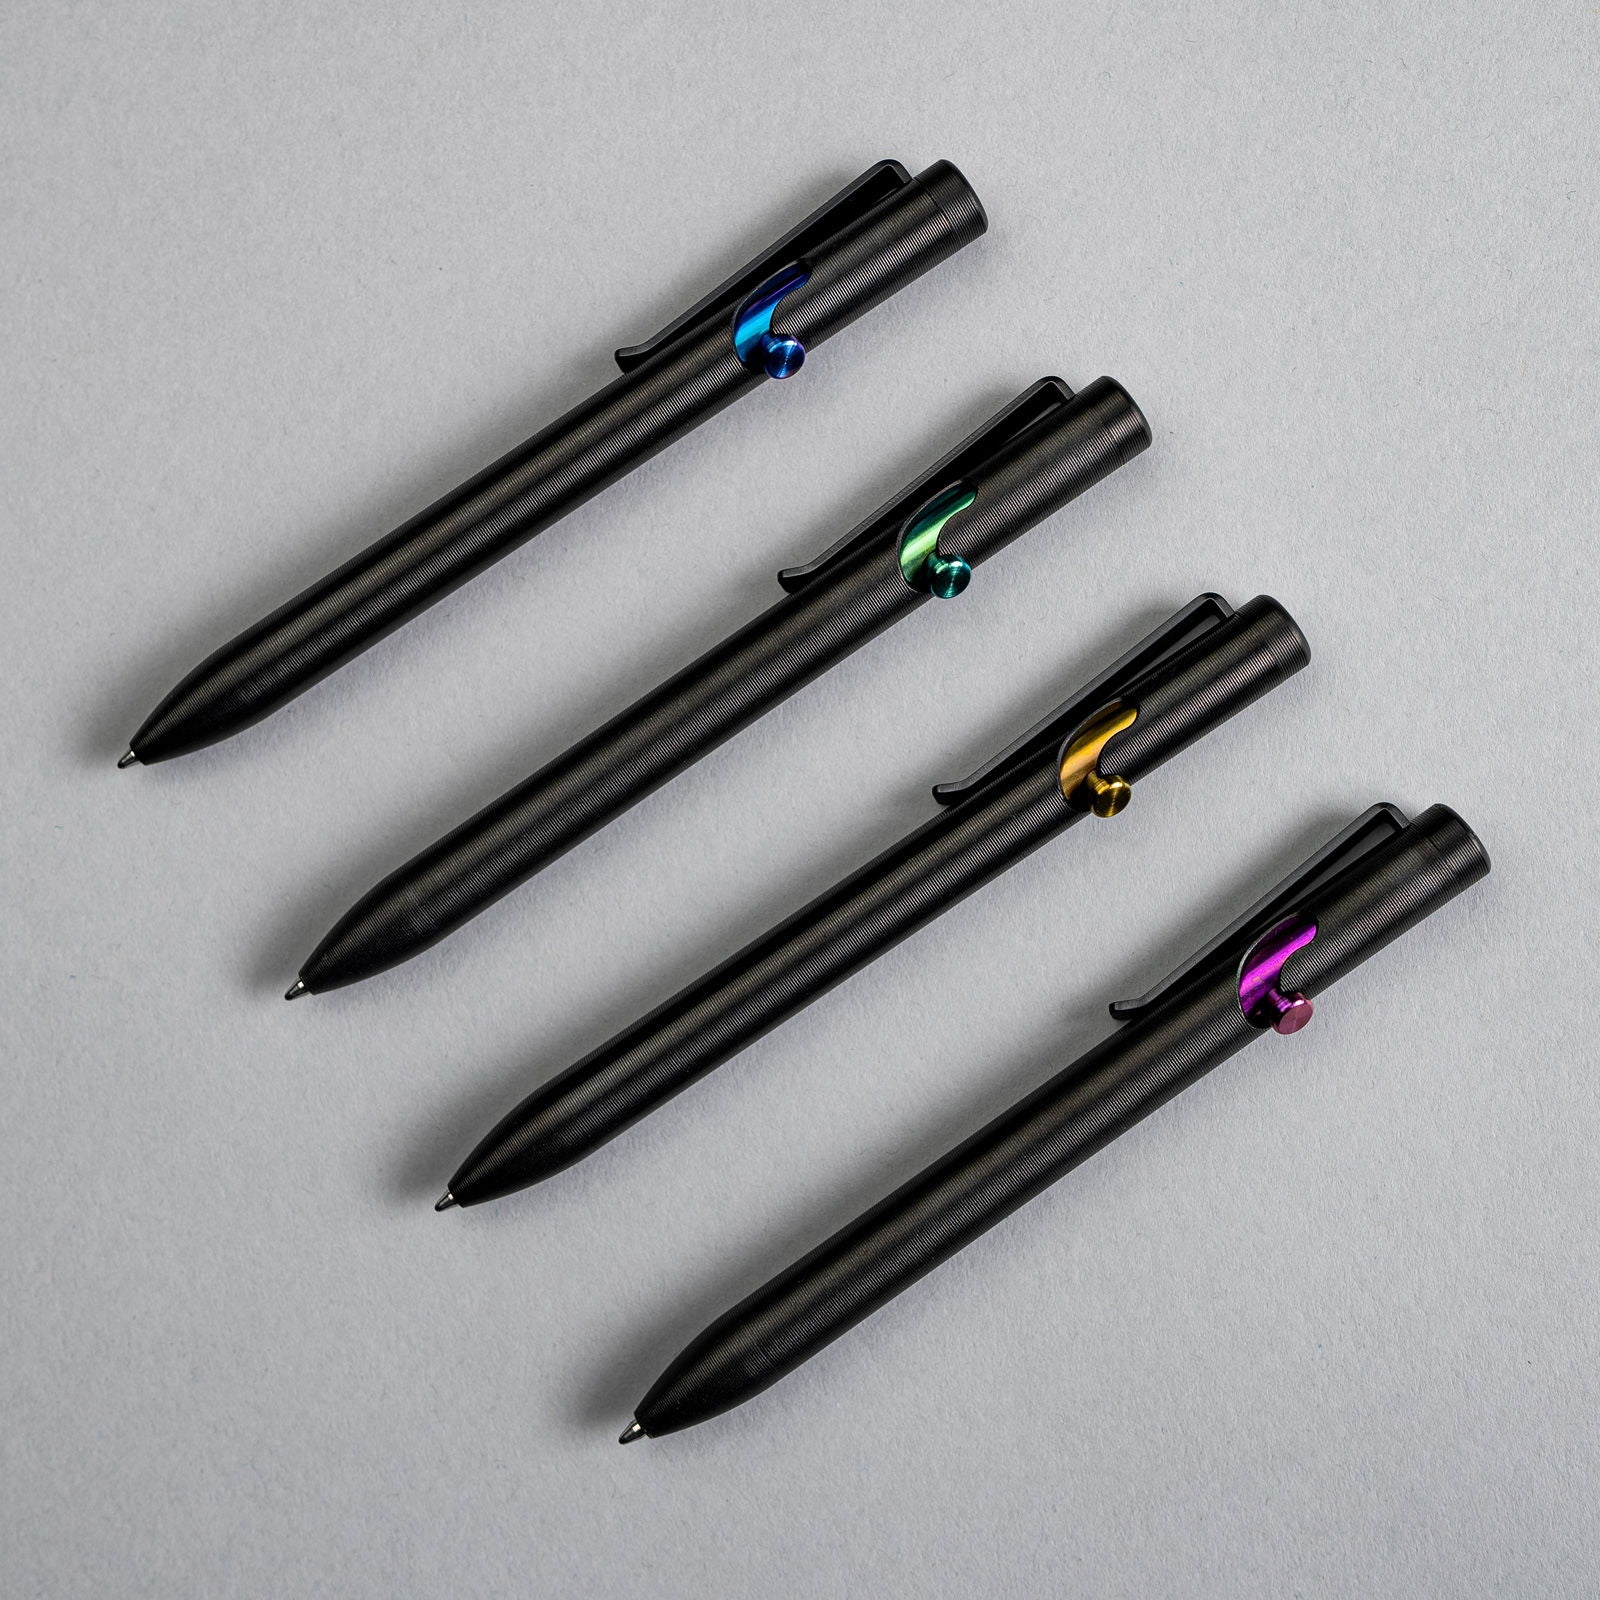 Tactile Turn - DLC Spezial-Stift mit Bolzenmechanismus